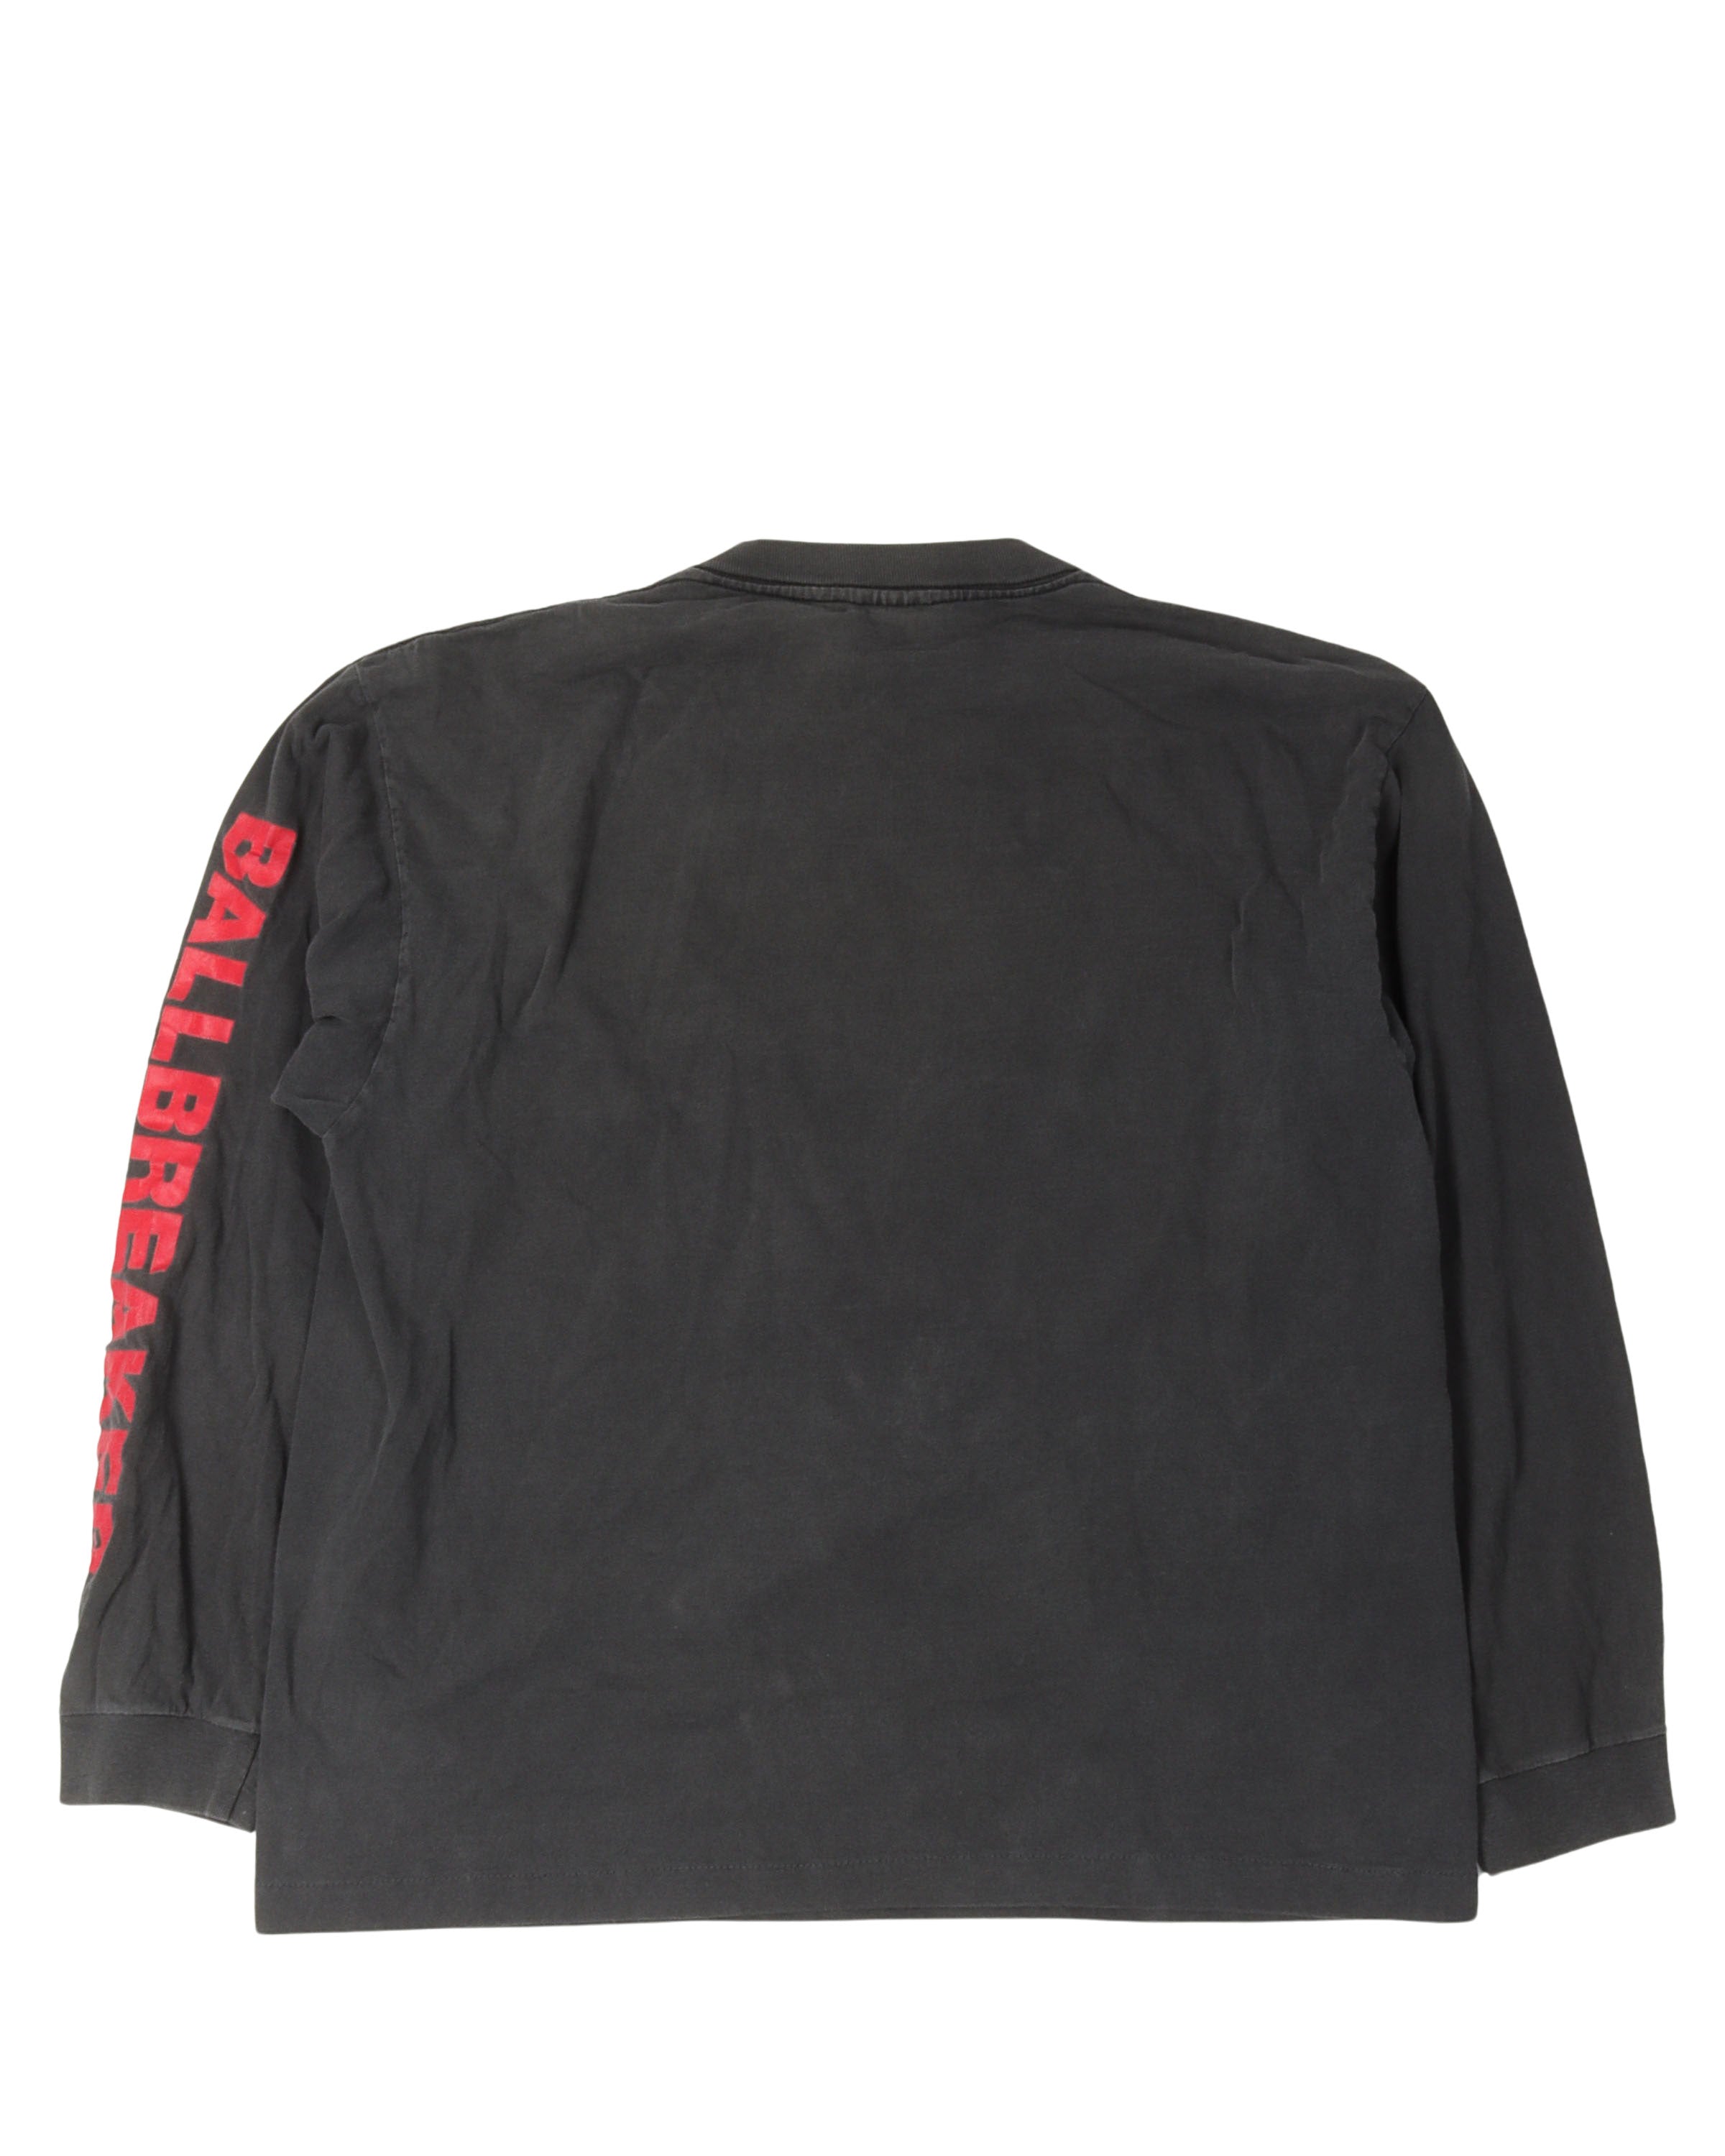 Cropped AC/DC Long Sleeve T-Shirt